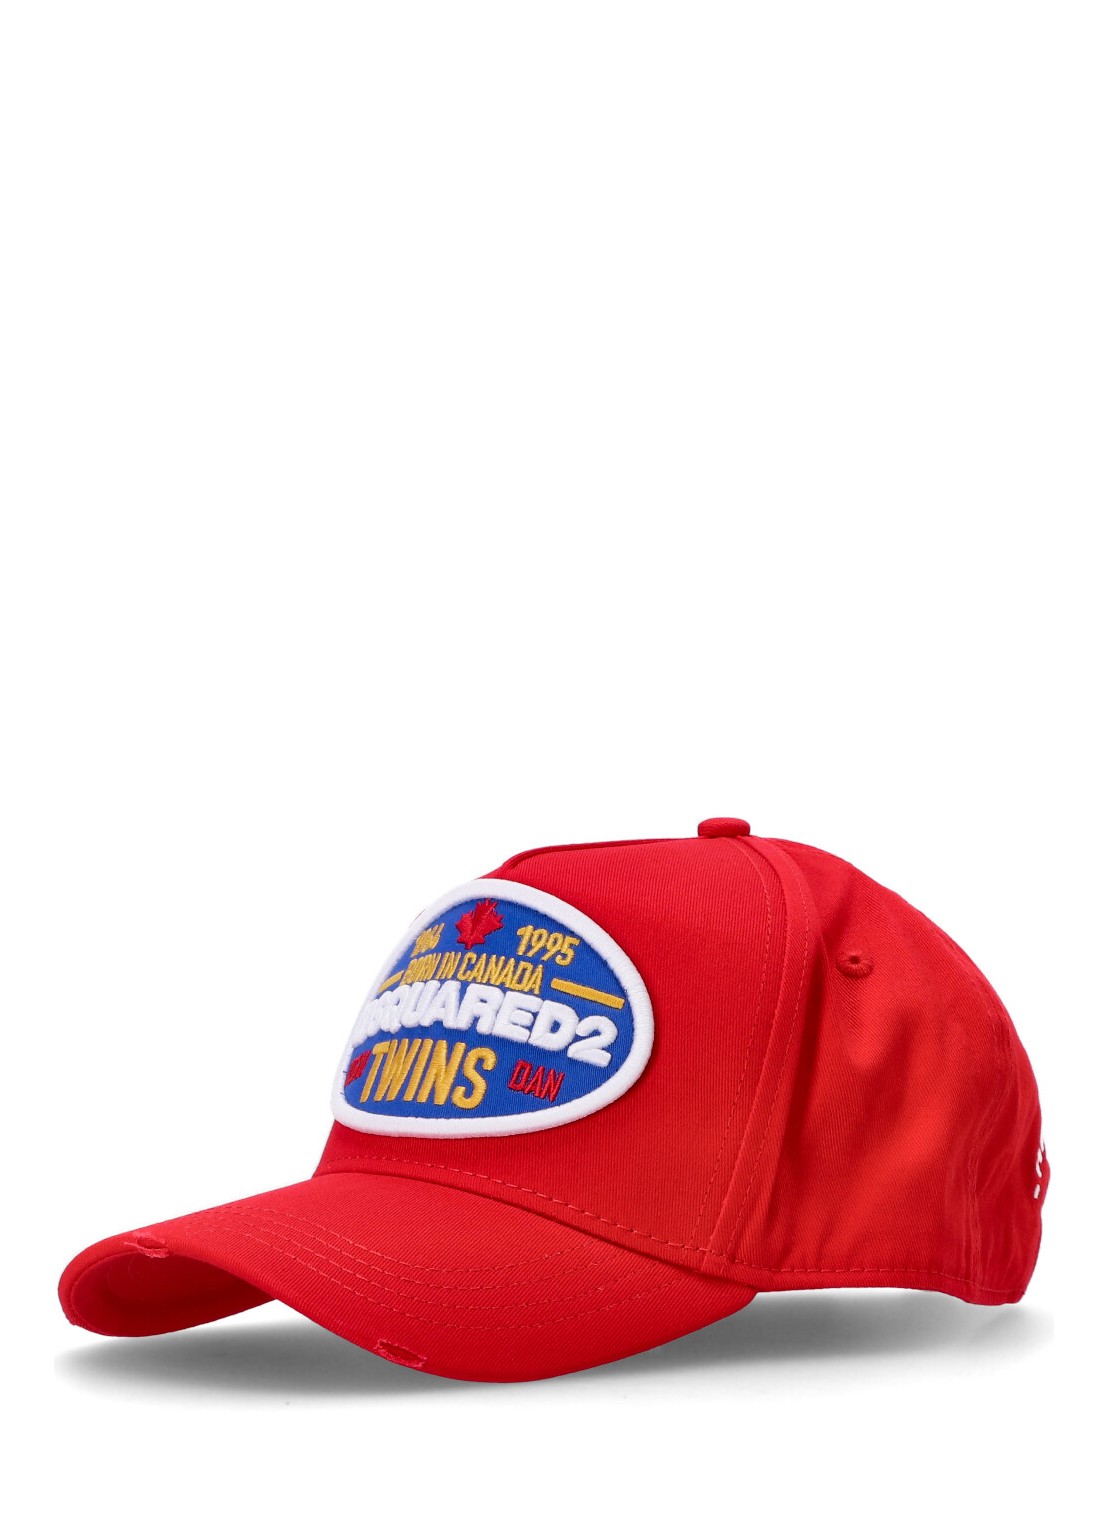 Gorras dsquared cap man dsquared2 logo baseball cap bcm078405c00001 4065 talla rojo
 